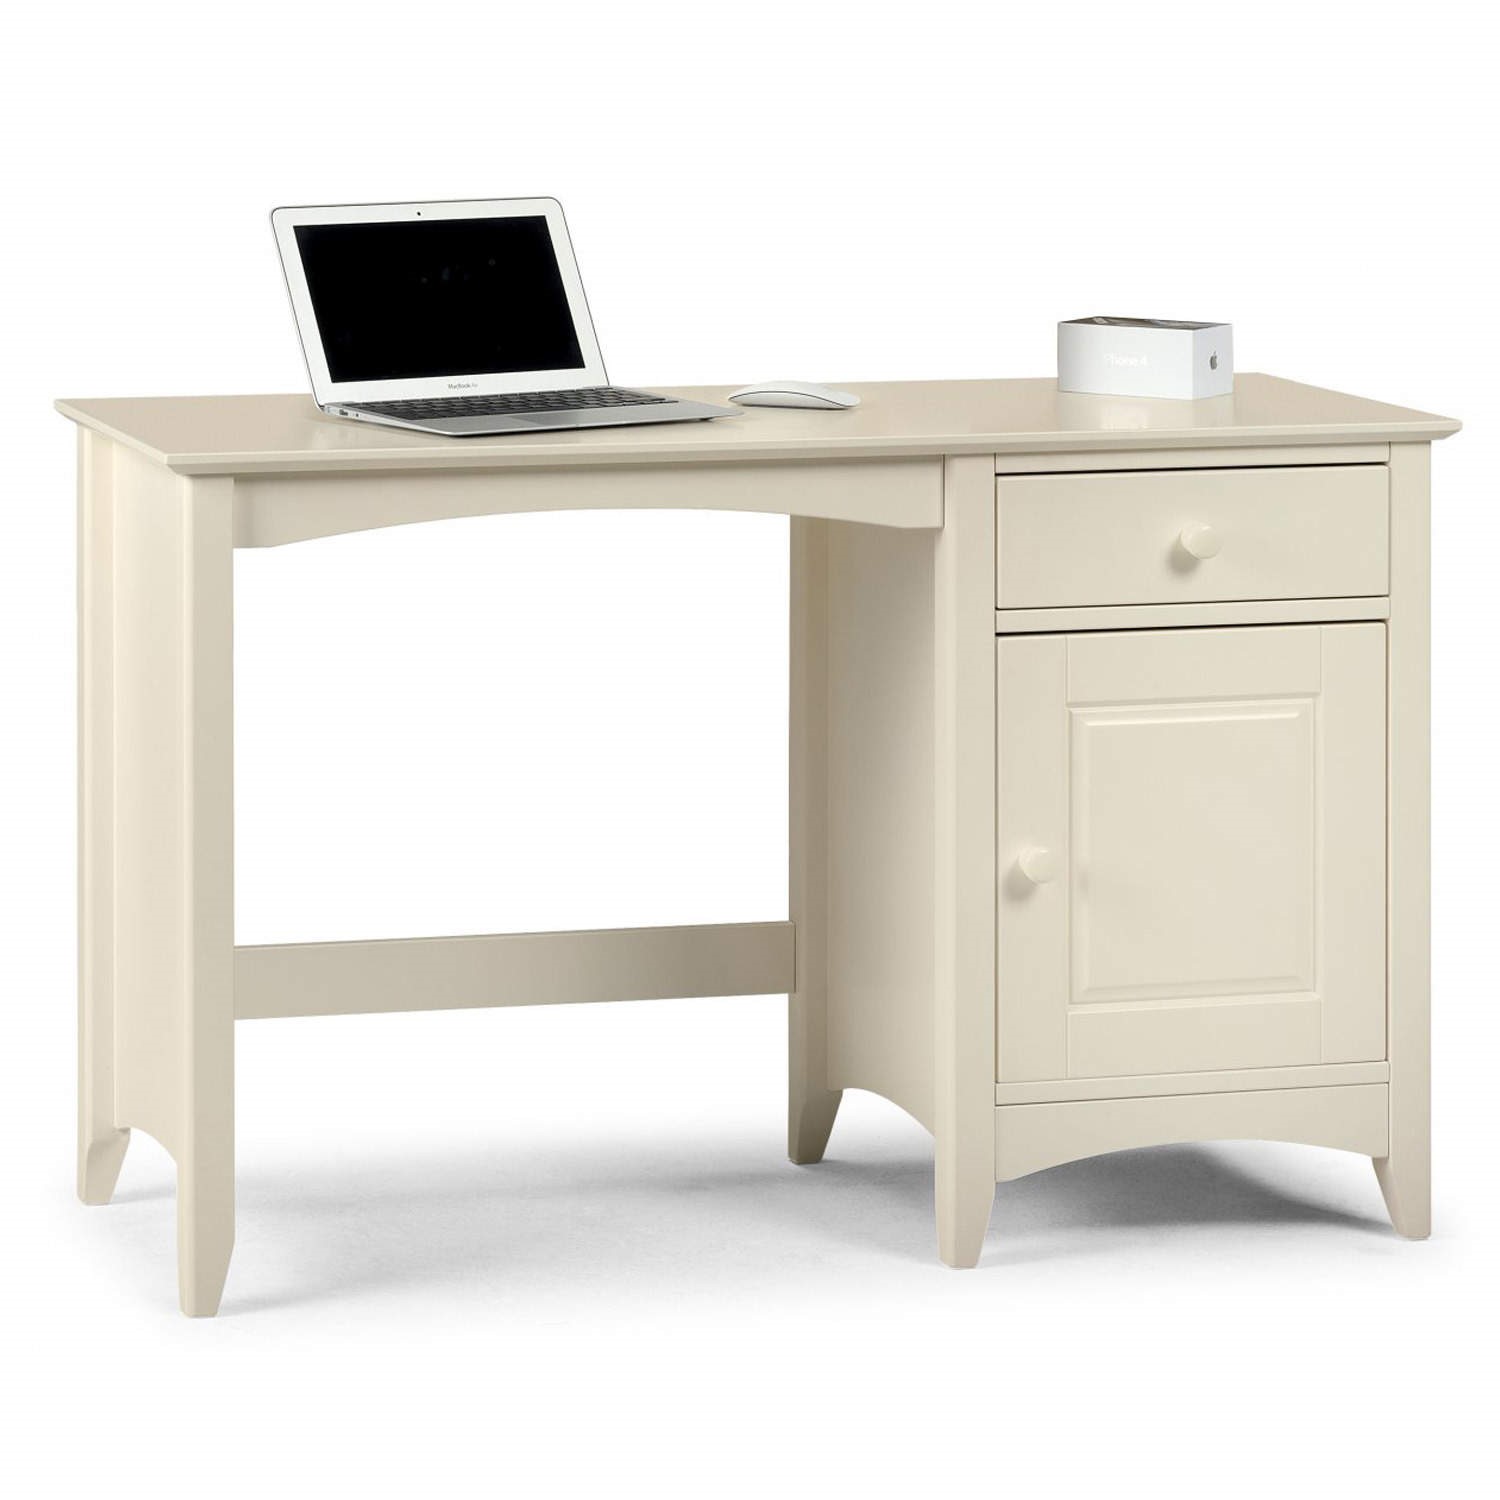 Photo of Cream wooden desk with storage - cameo - julian bowen